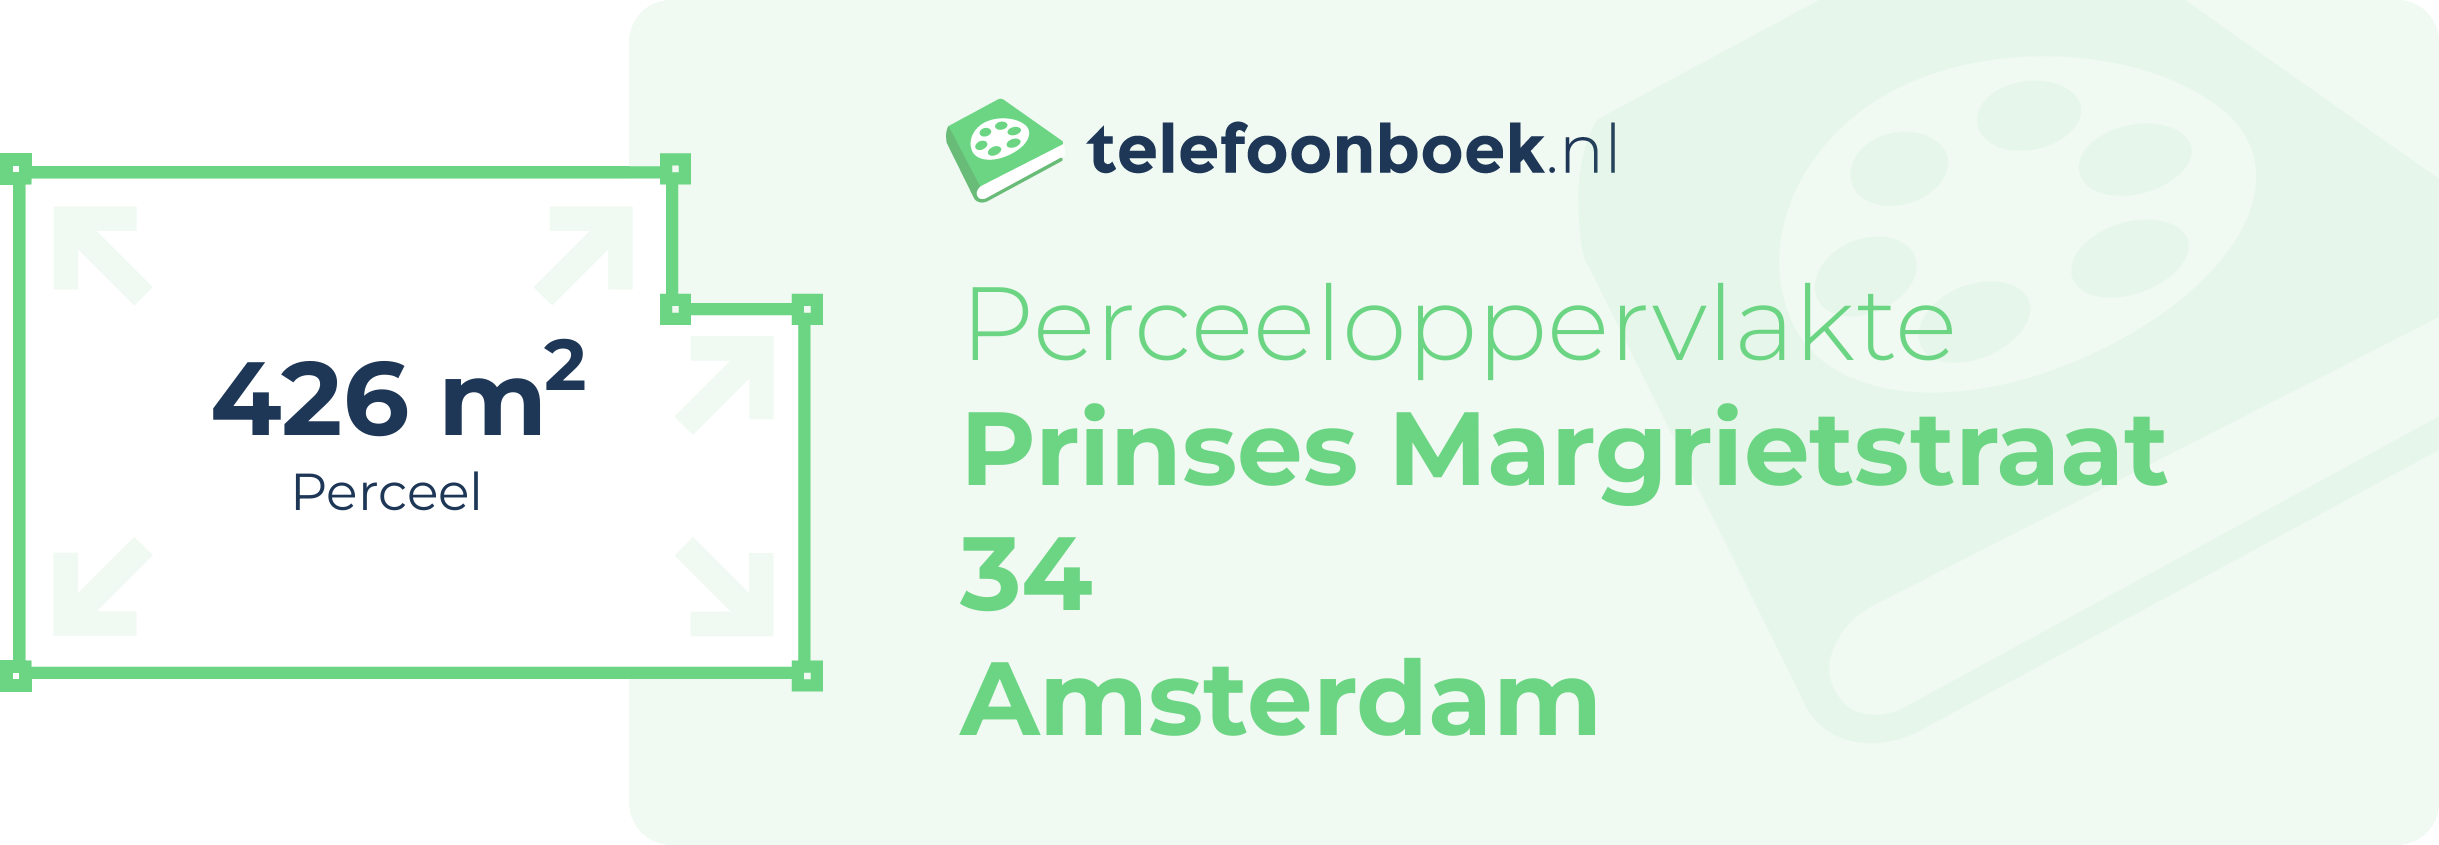 Perceeloppervlakte Prinses Margrietstraat 34 Amsterdam